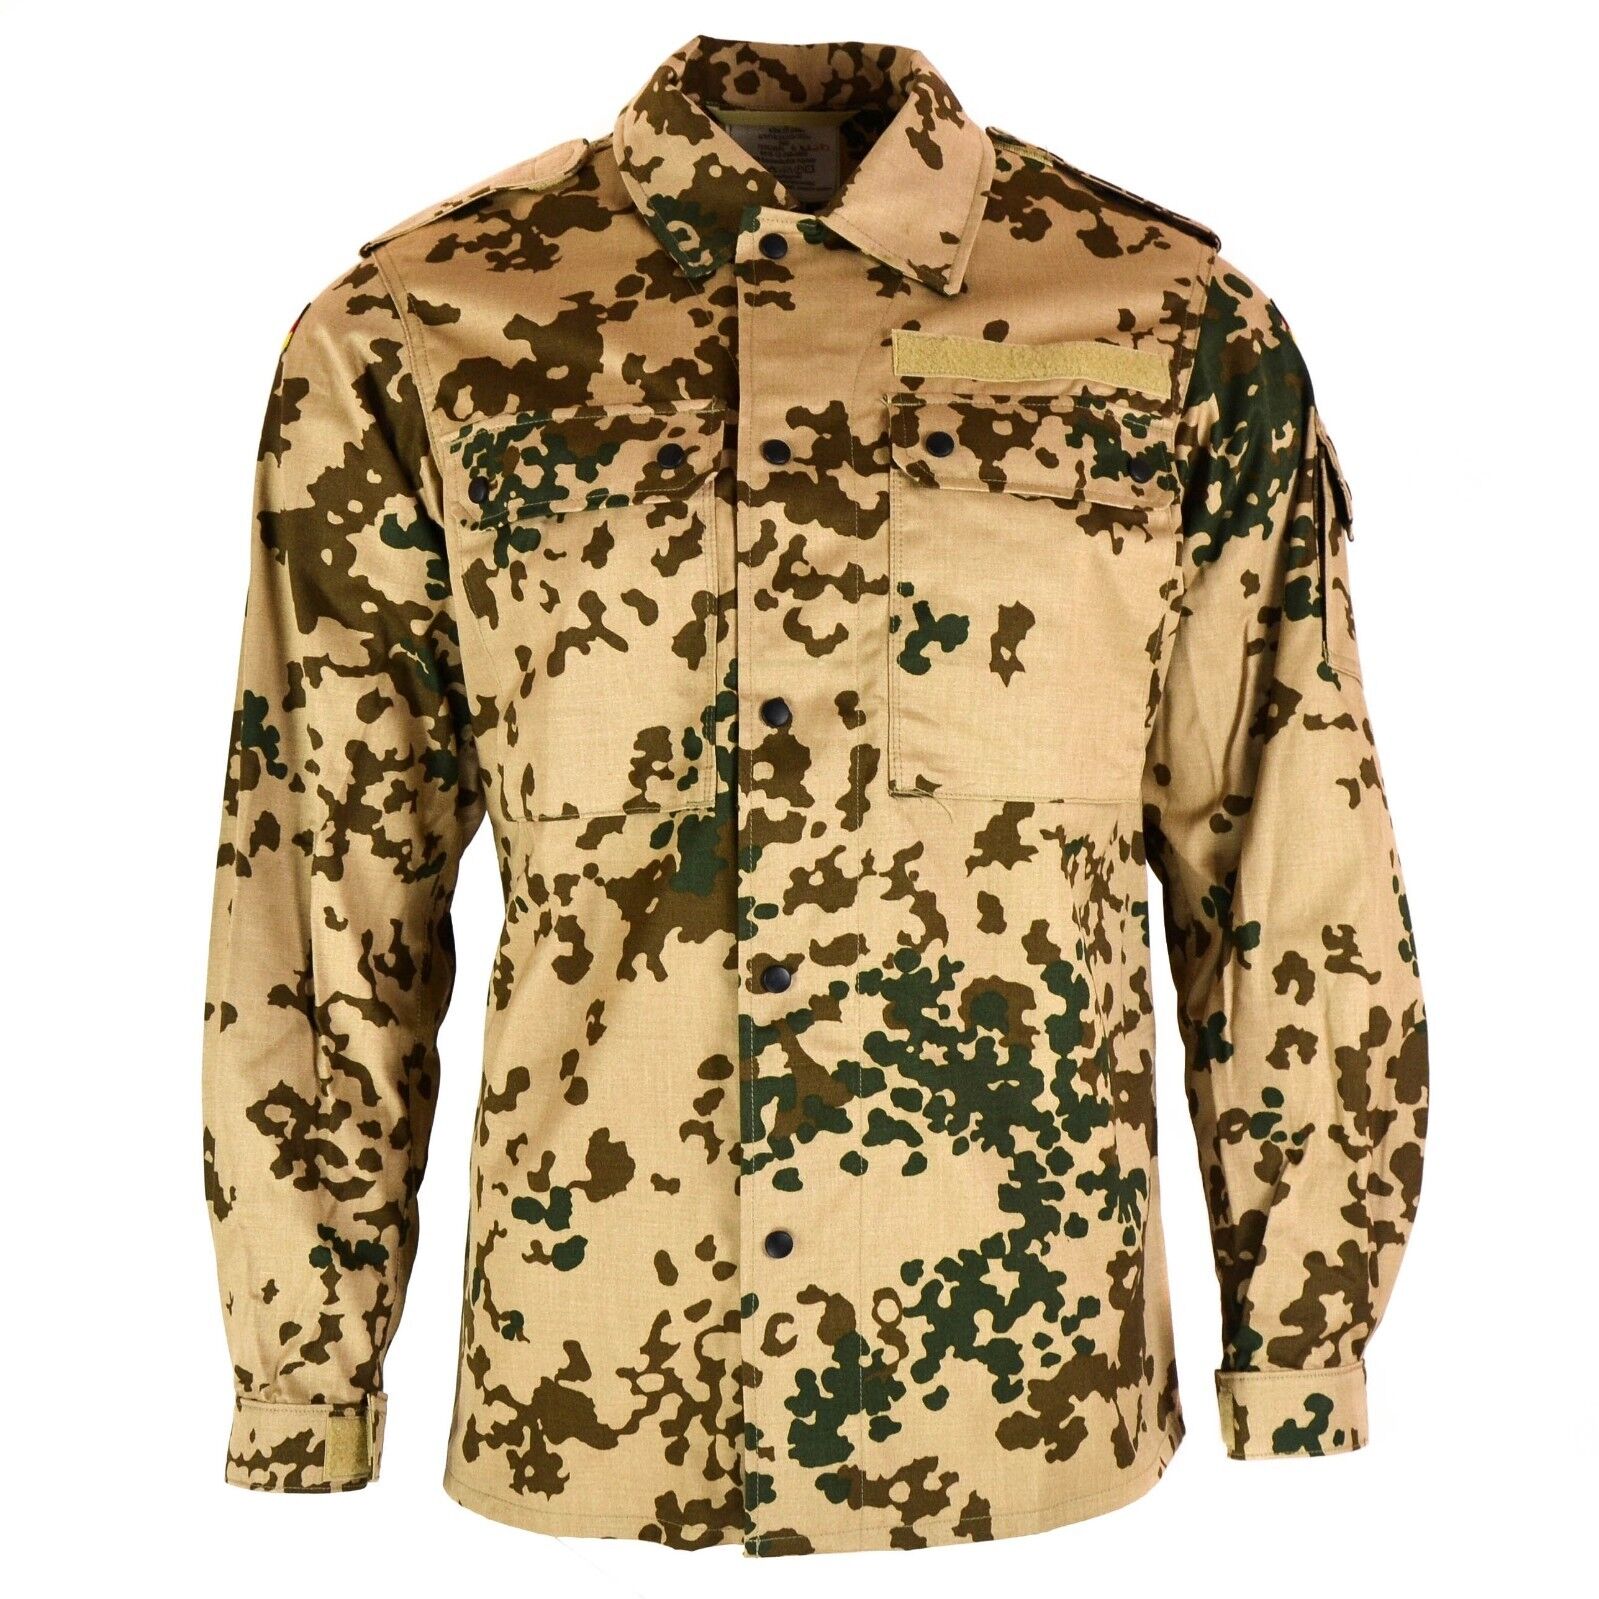 Original German army jacket Tropentarn camo Desert field combat jacket bdu